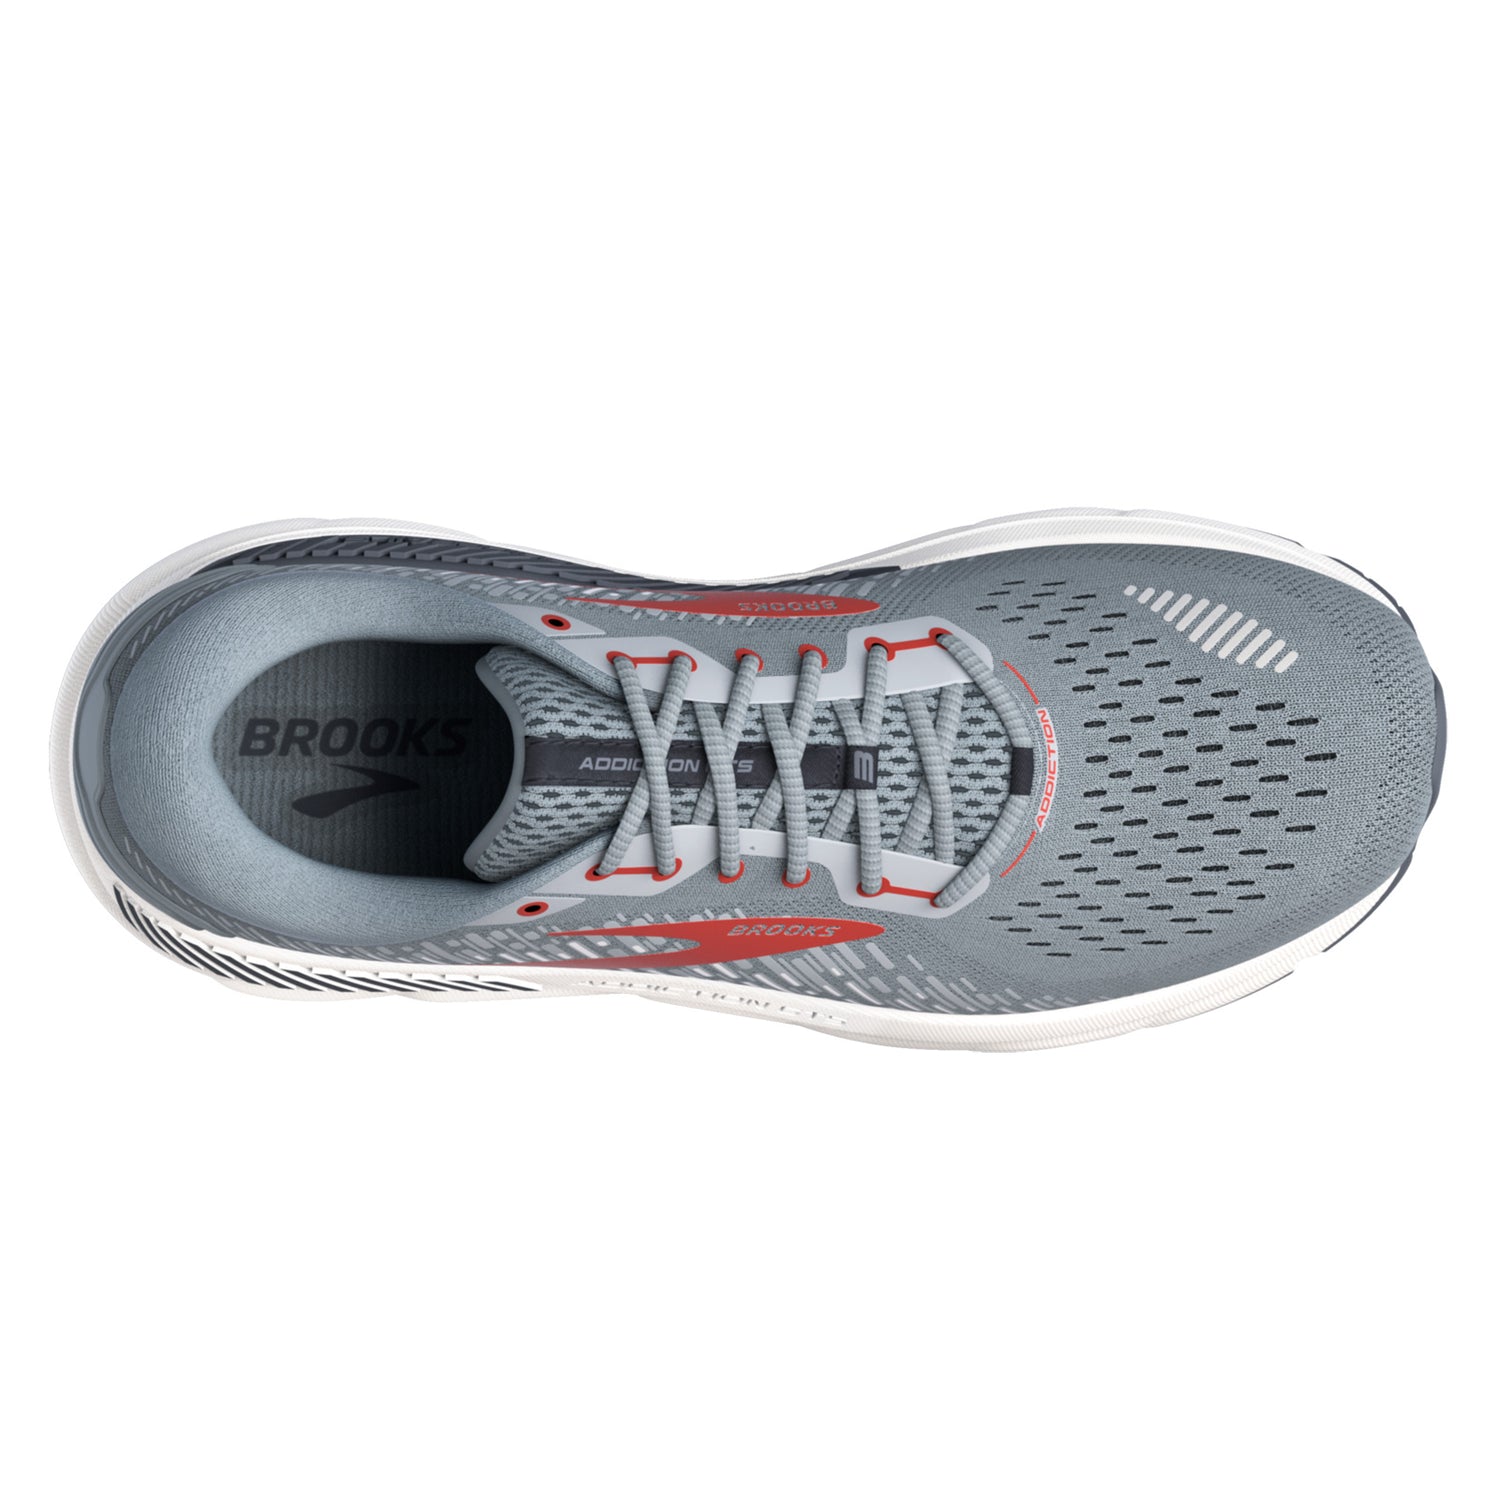 Peltz Shoes  Men's Brooks Addiction GTS 15 Running Shoe - Wide Width Grey/Ebony/Chili Oil 110365 2E 043